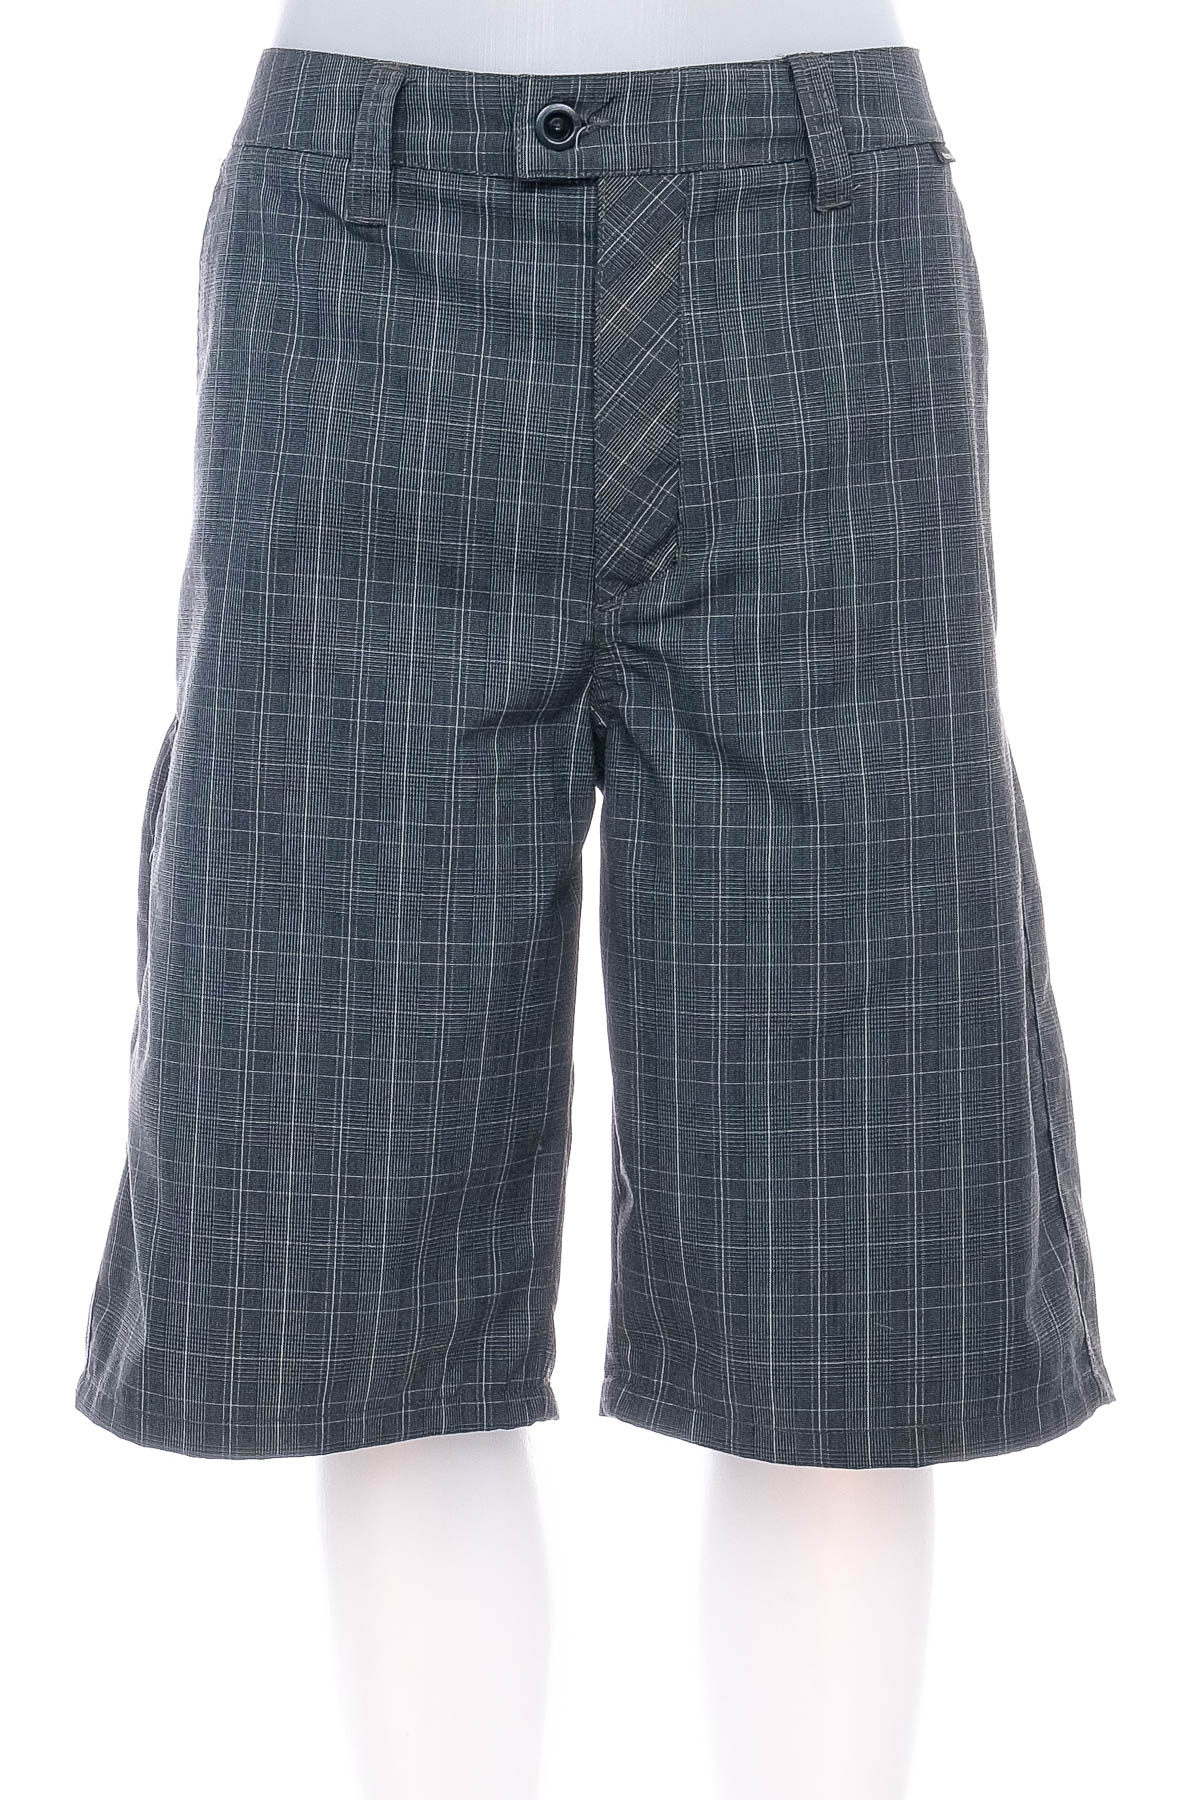 Men's shorts - Hurley - 0